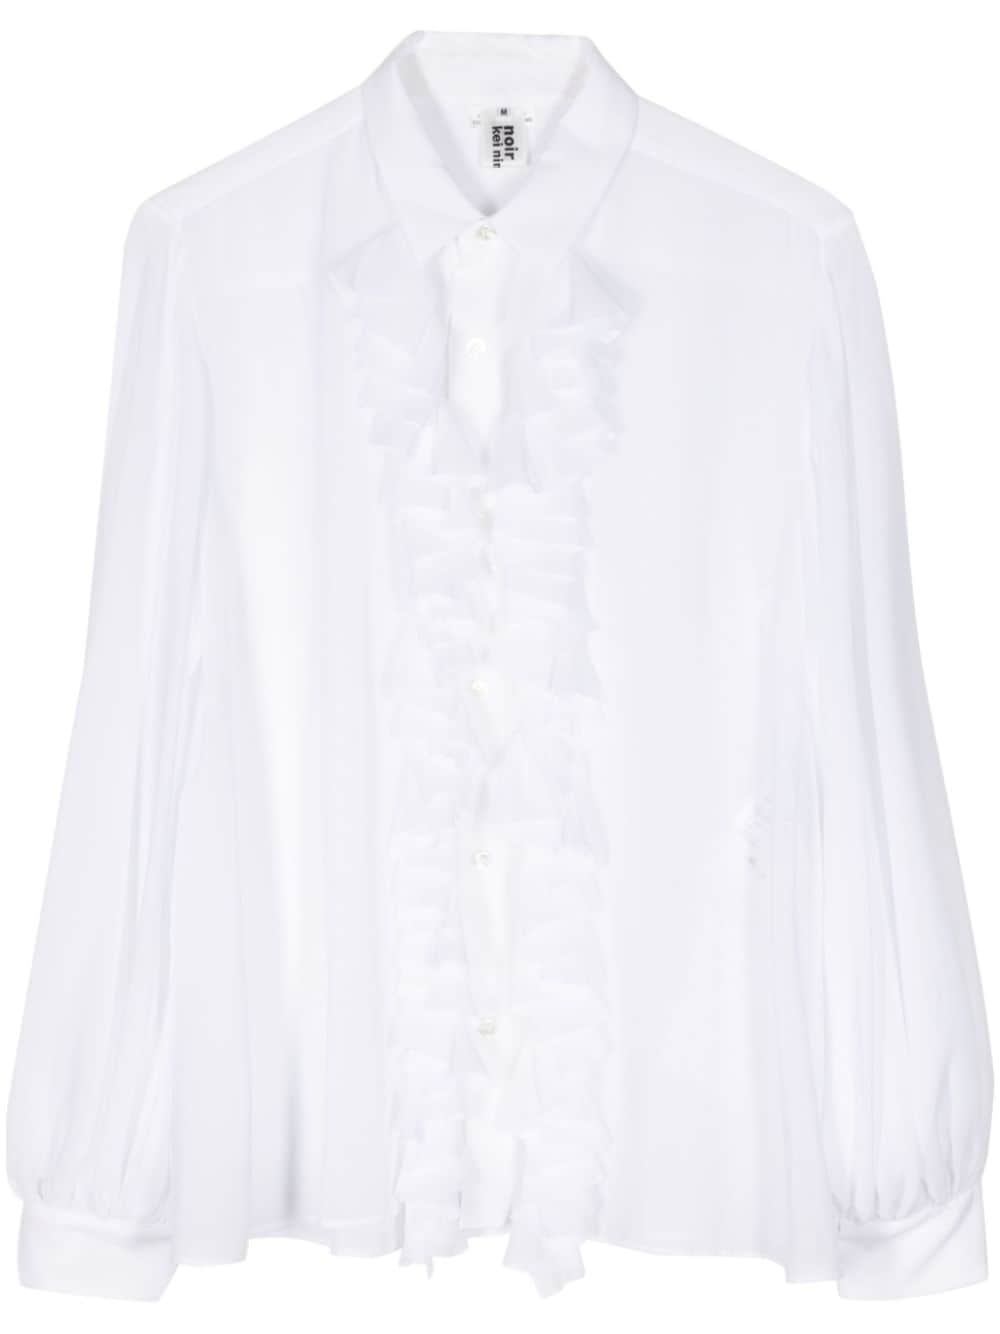 Noir Kei Ninomiya frill-detailing shirt - White von Noir Kei Ninomiya